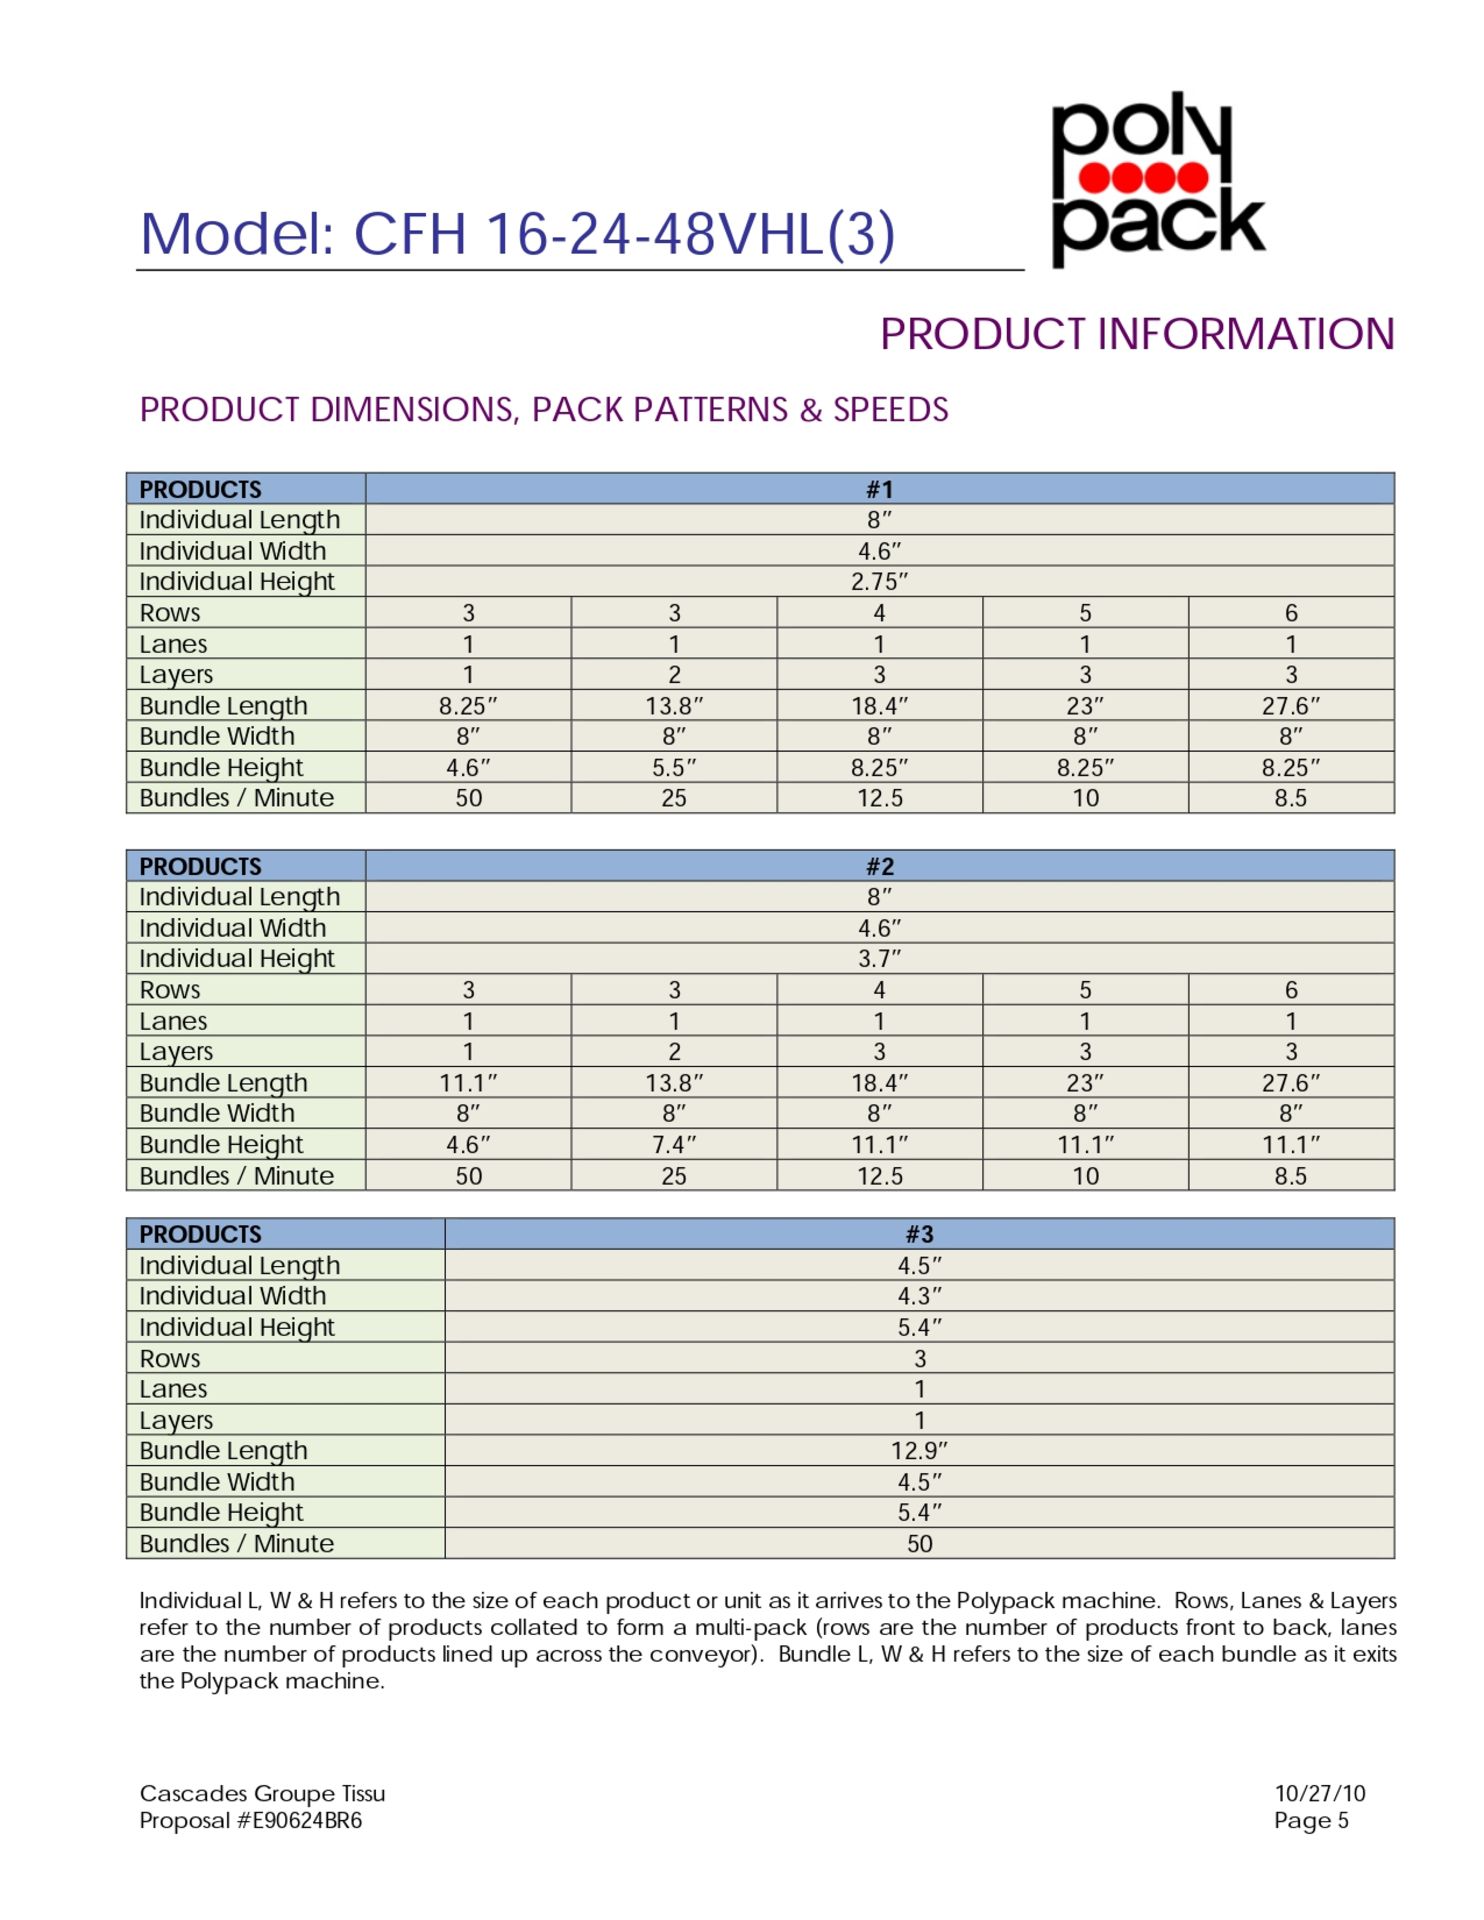 2010 SHRINK WRAPPER FULLY AUTOMATIC, BRAND: POLY PACK, MODEL CFH 16-24-48VHL(3), 600V, 40AMP, - Image 17 of 29